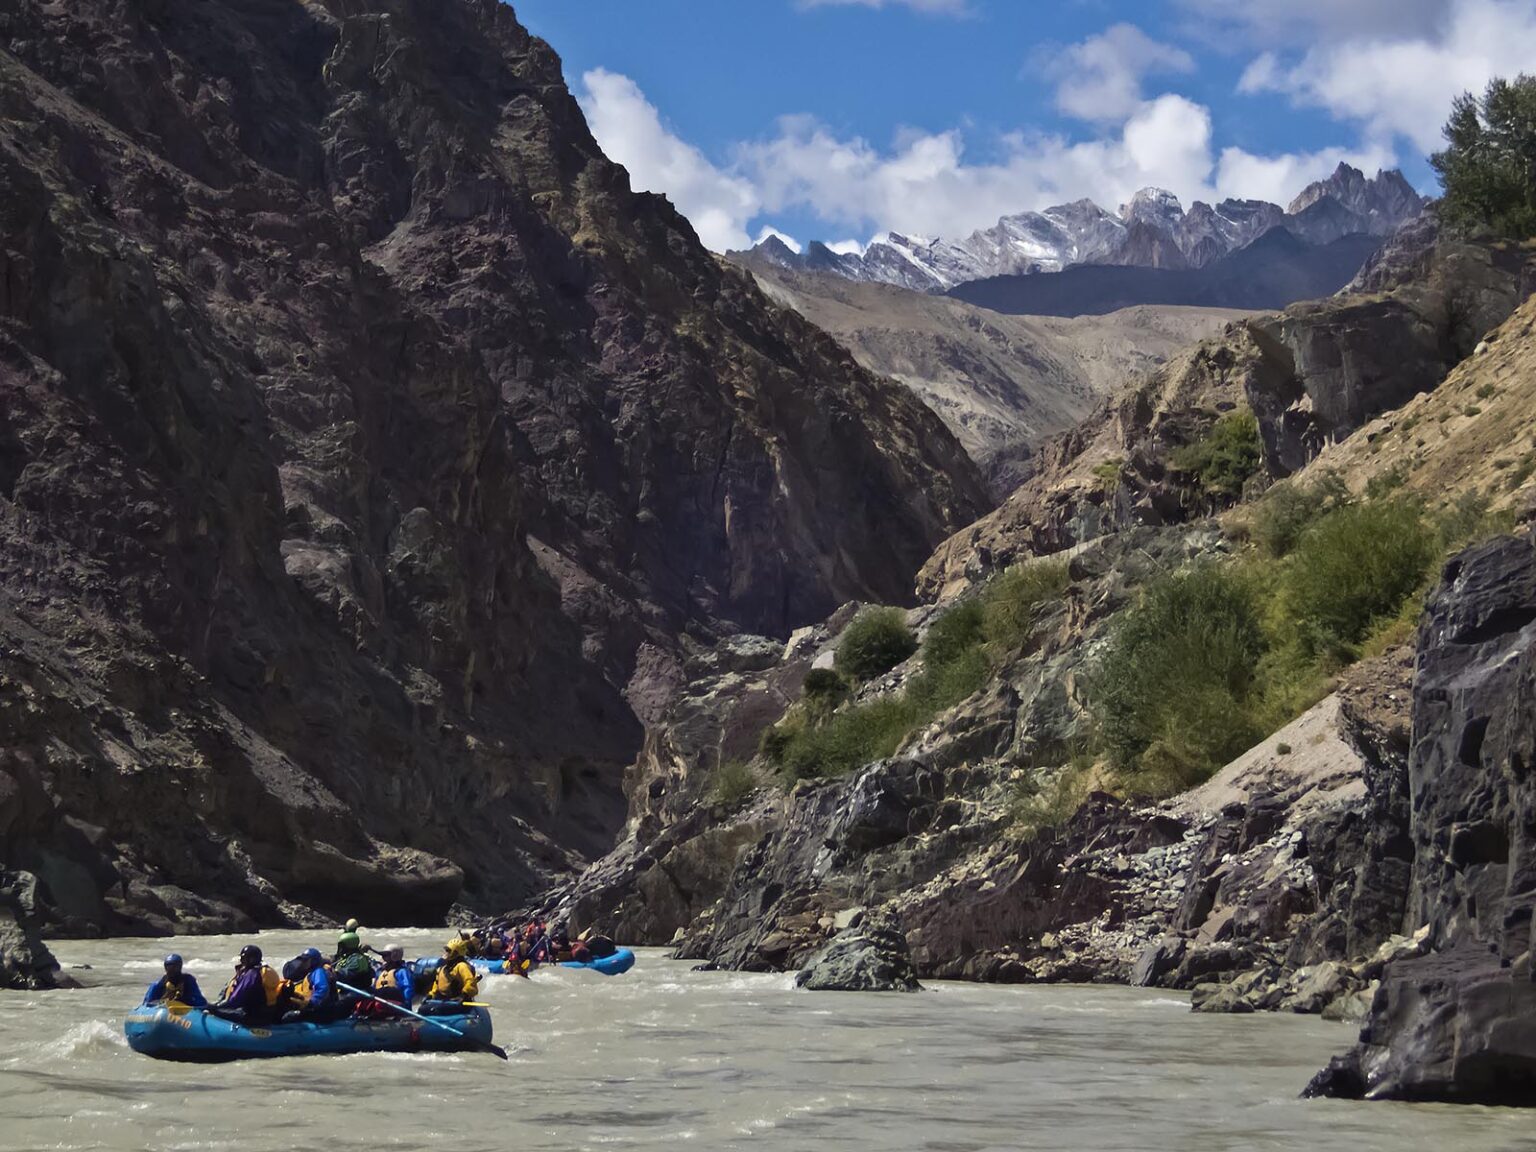 River rafting down the ZANSKAR RIVER GORGE considered the Grand Canyon of the Himalayas - ZANSKAR, LADAKH, INDIA